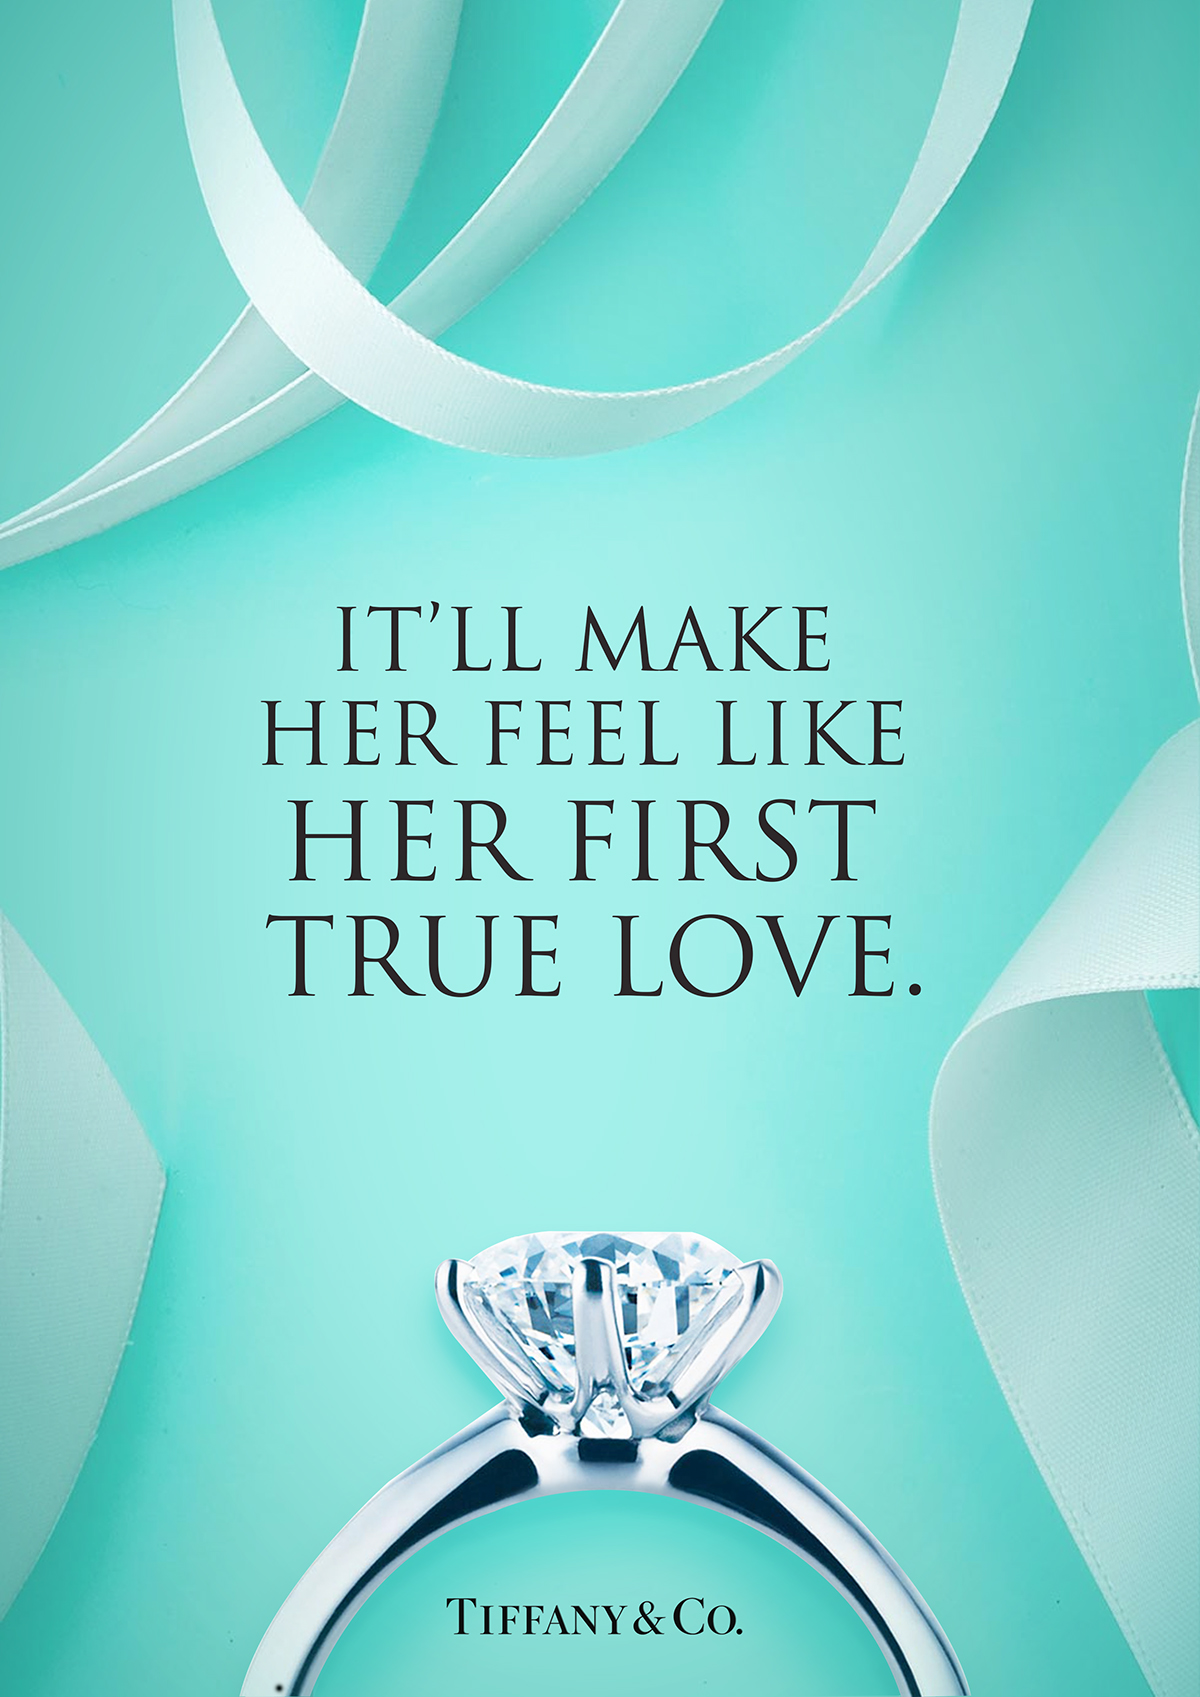 Tiffany & Co. print advertising